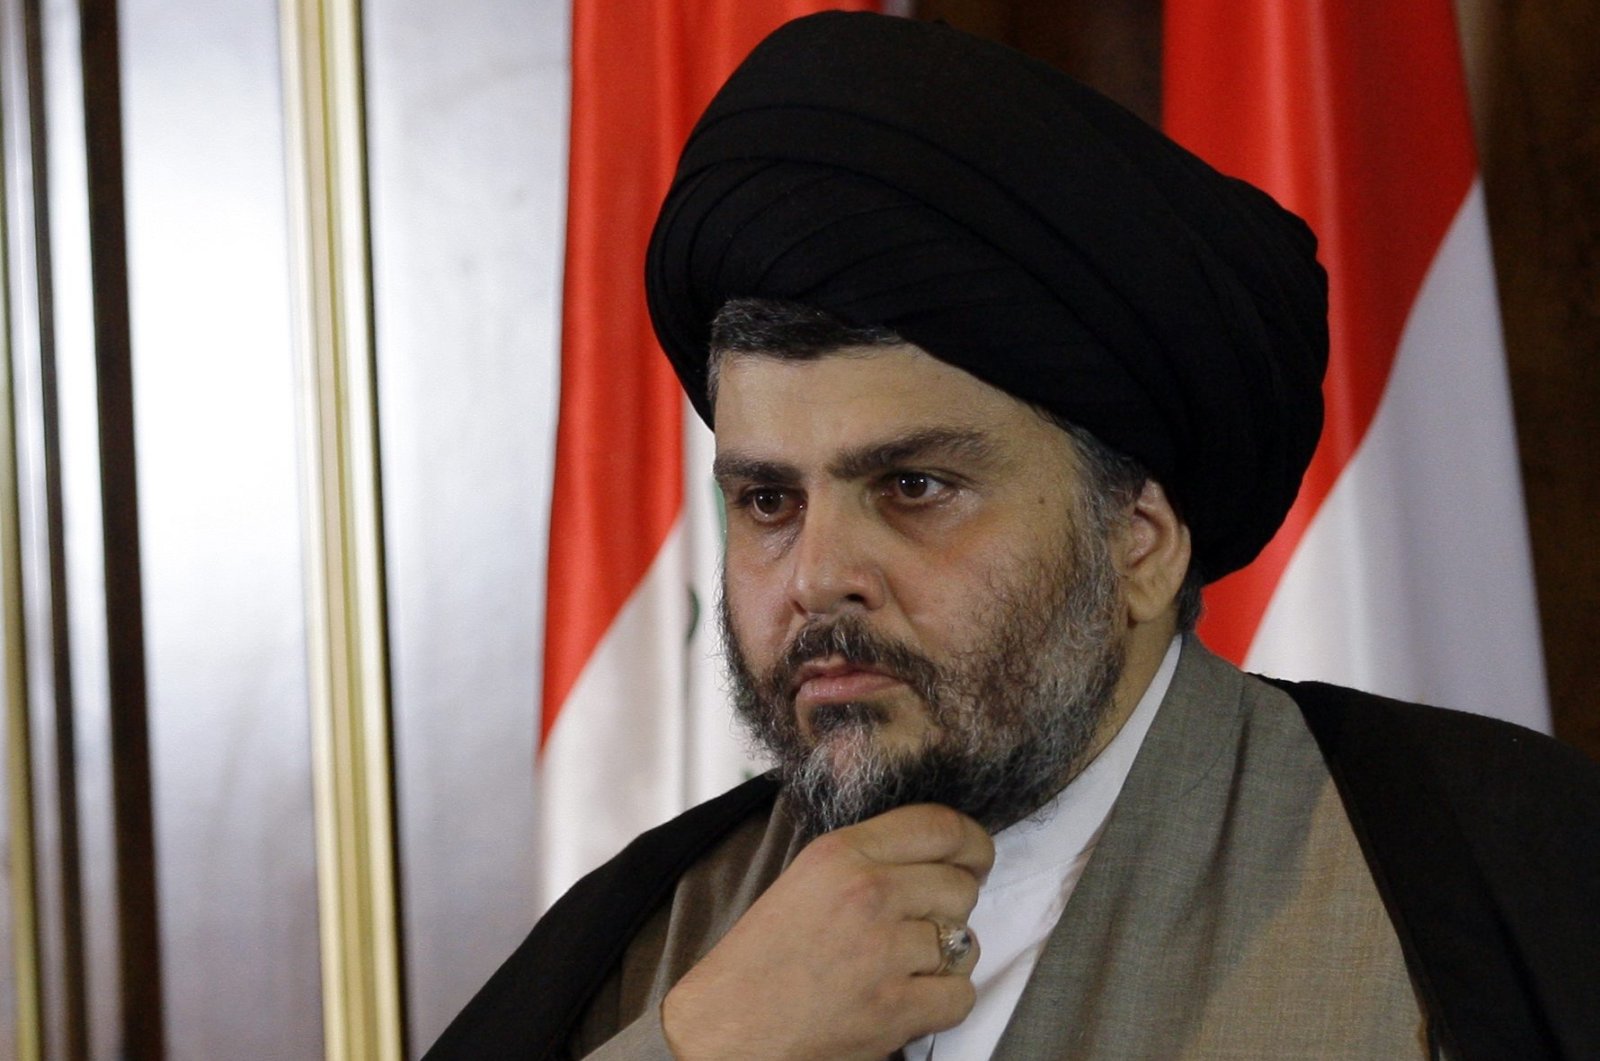 Shiite cleric Muqtada al-Sadr looks on during a press conference in Irbil, Iraq, April 26, 2012. (AP Photo)